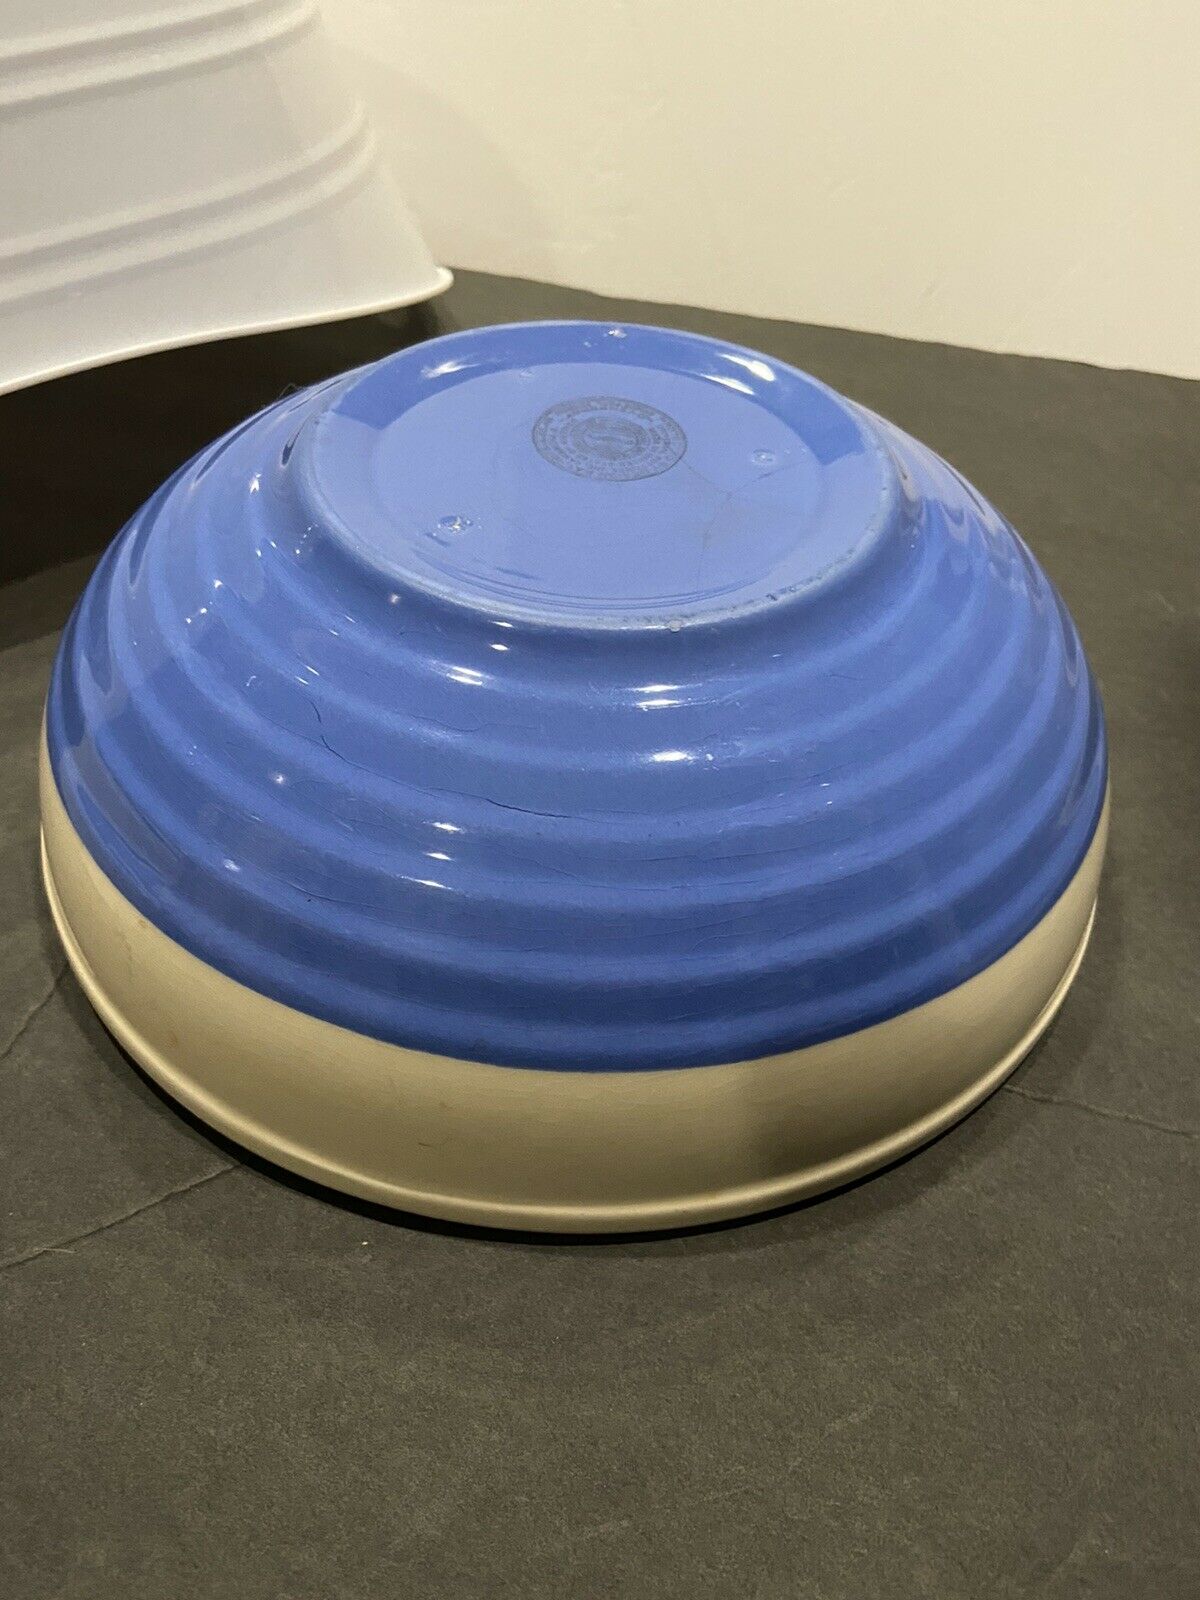 Large 9" Vintage Or Antique Universal Pottery Ovenproof Serving Bowl Blue White